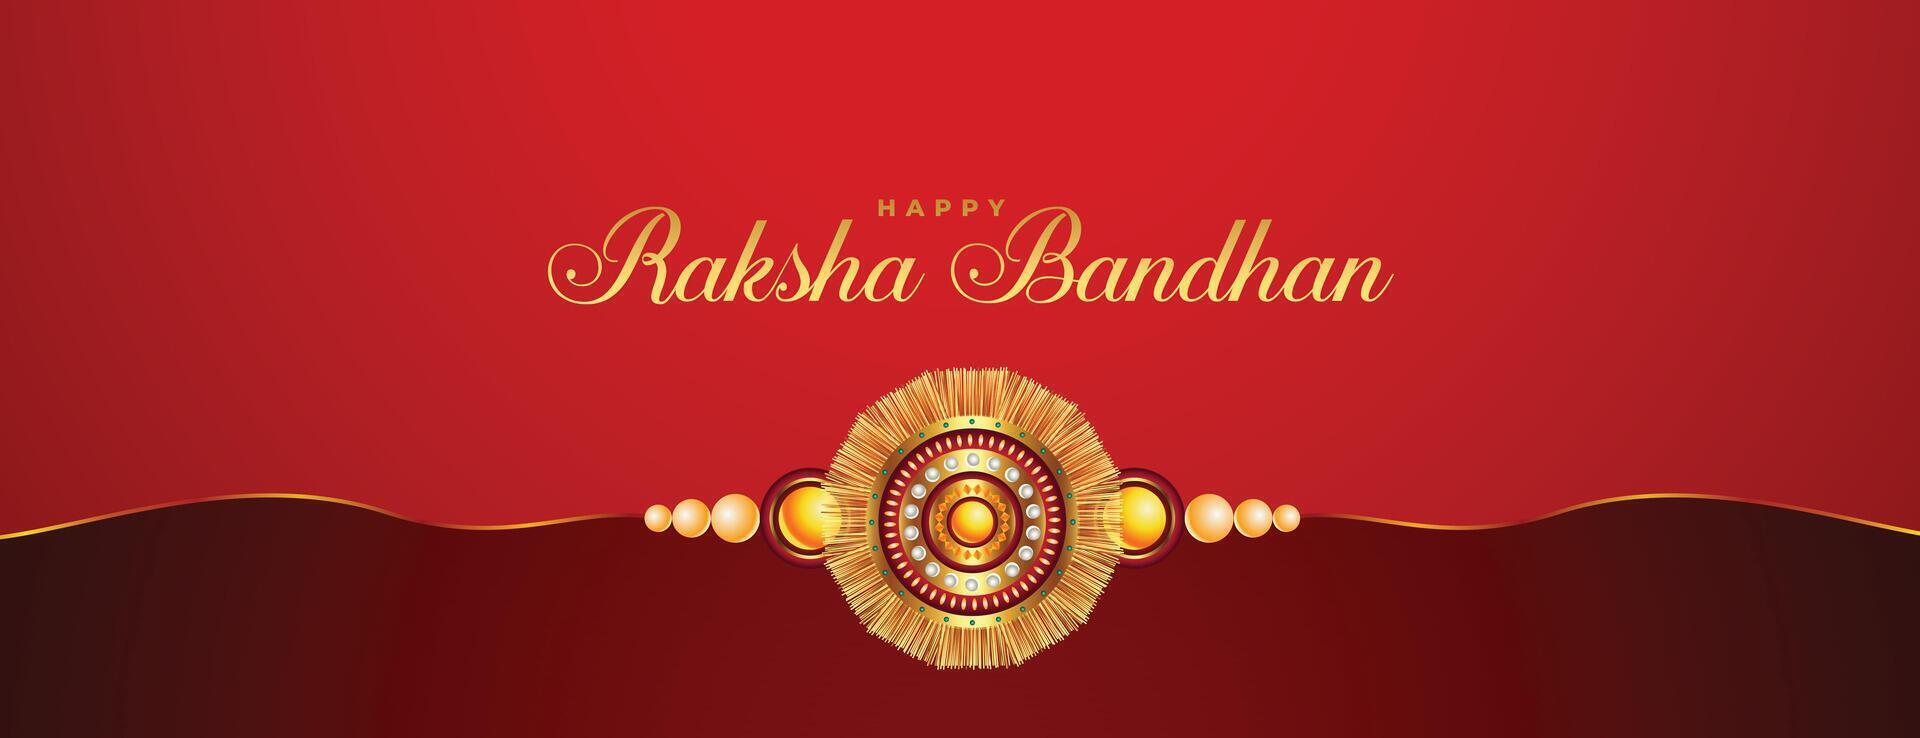 hindu religion raksha bandhan festival banner design vector